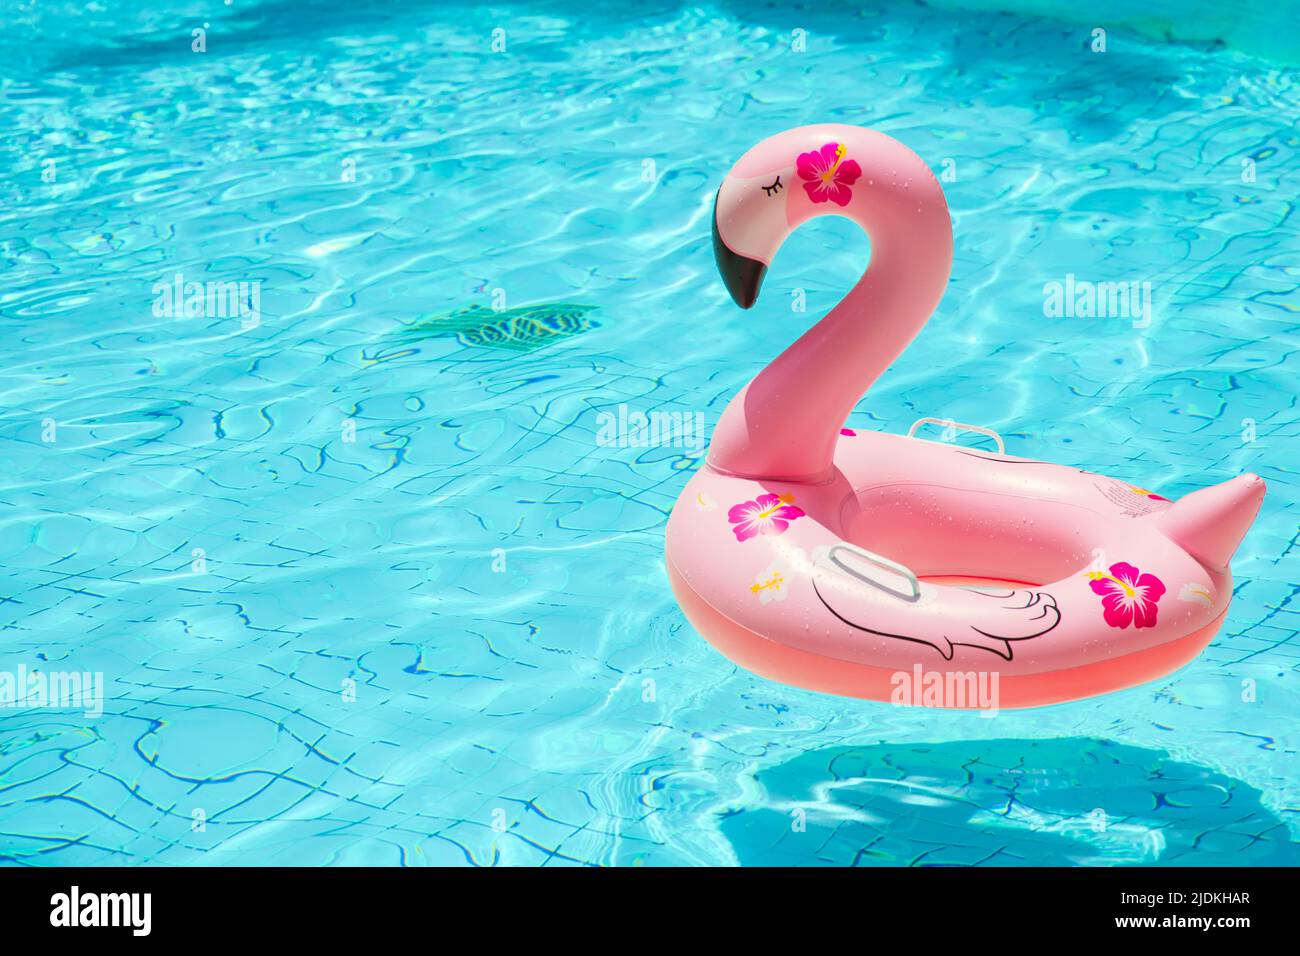 Leerer Swimmingpool mit Pink Flamingo Schwimmring Kühle Sommersaison niemand. Stockfoto